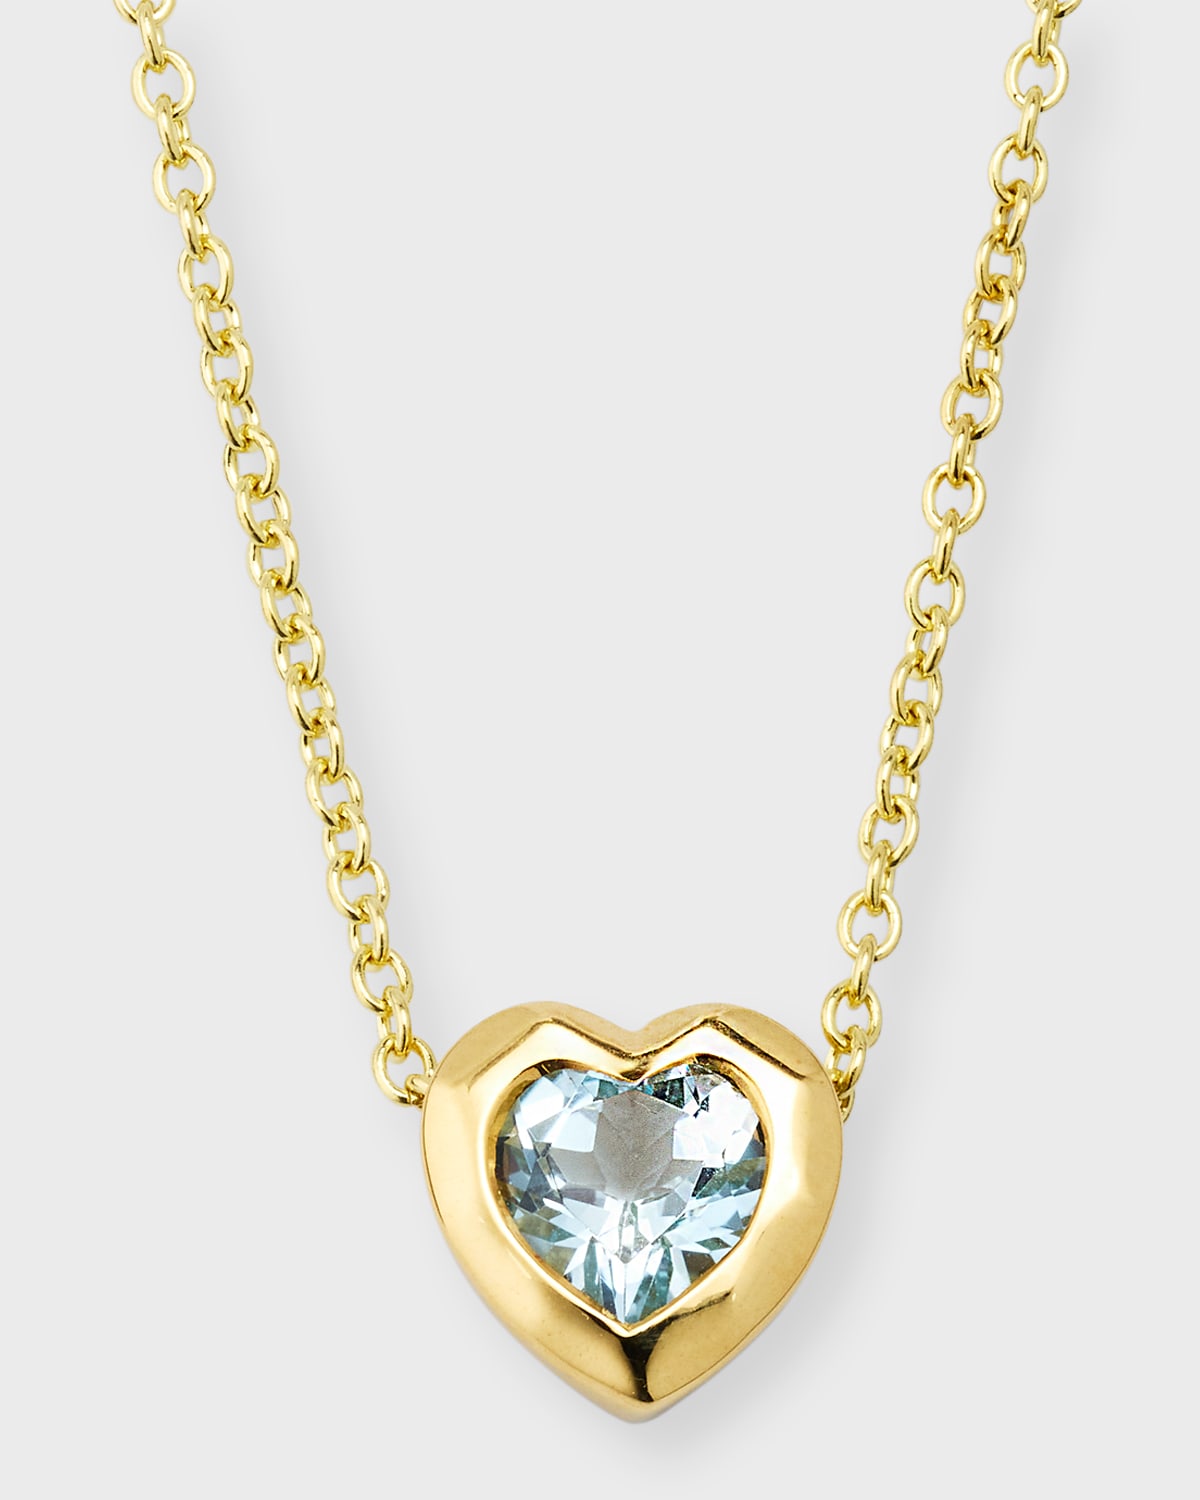 18K Rock Candy Caramella Heart Pendant in Blue Topaz, 16-18"L